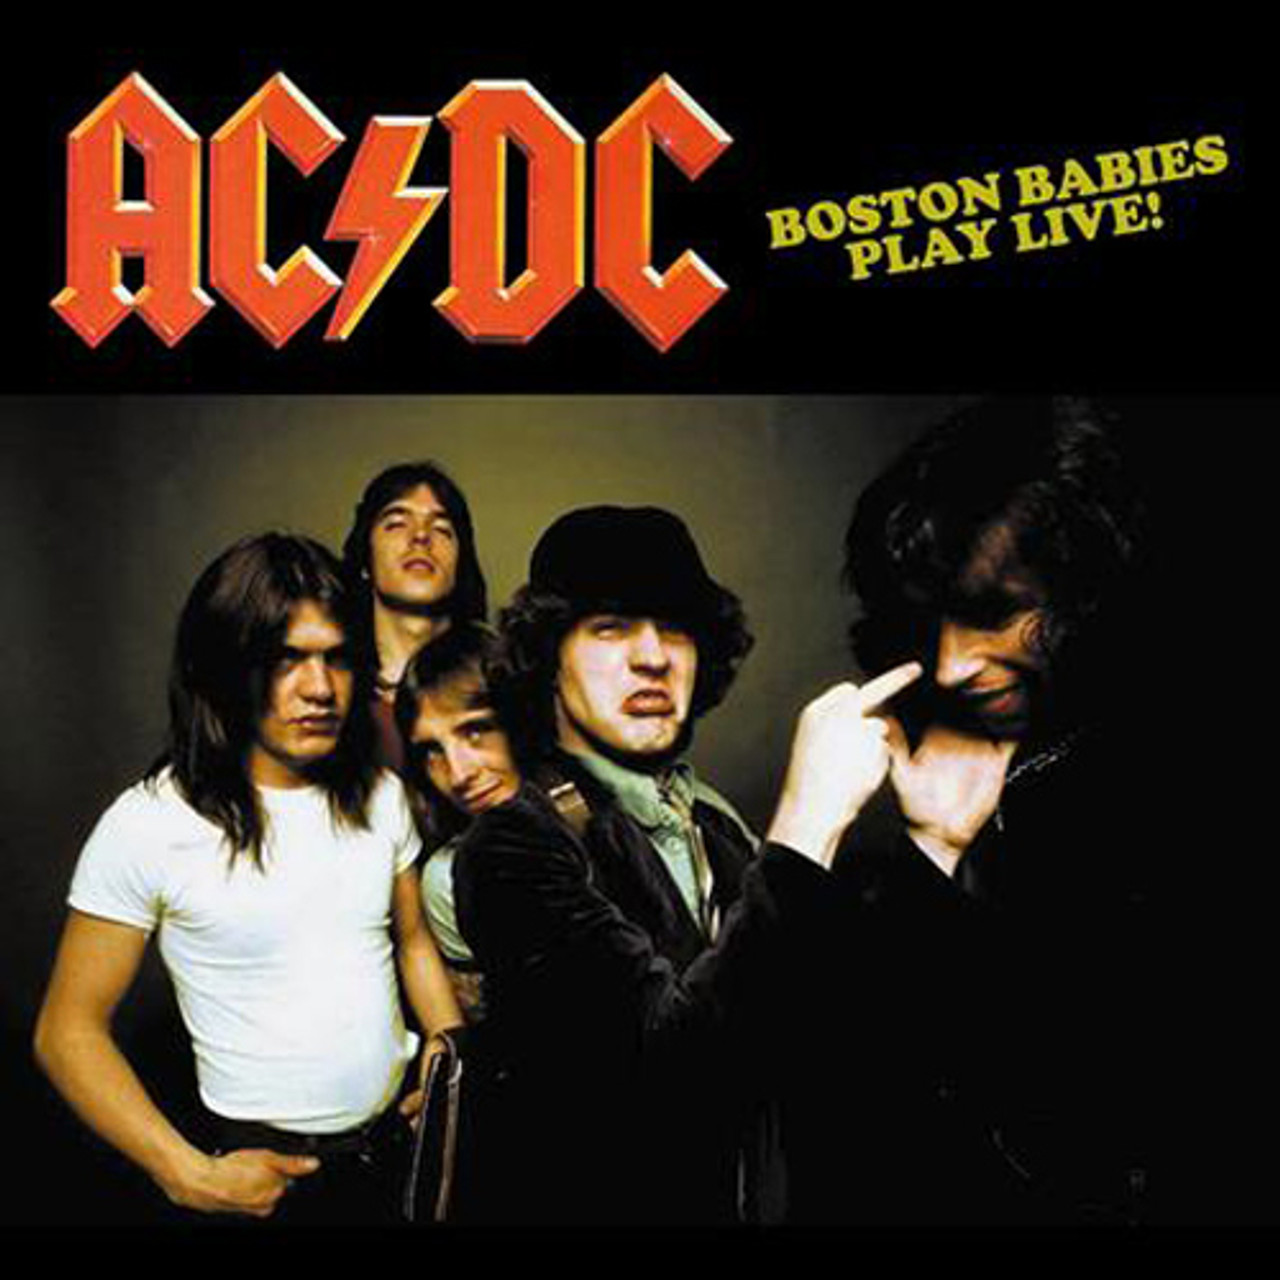 AC/DC - Boston Babies Play Live! - LP